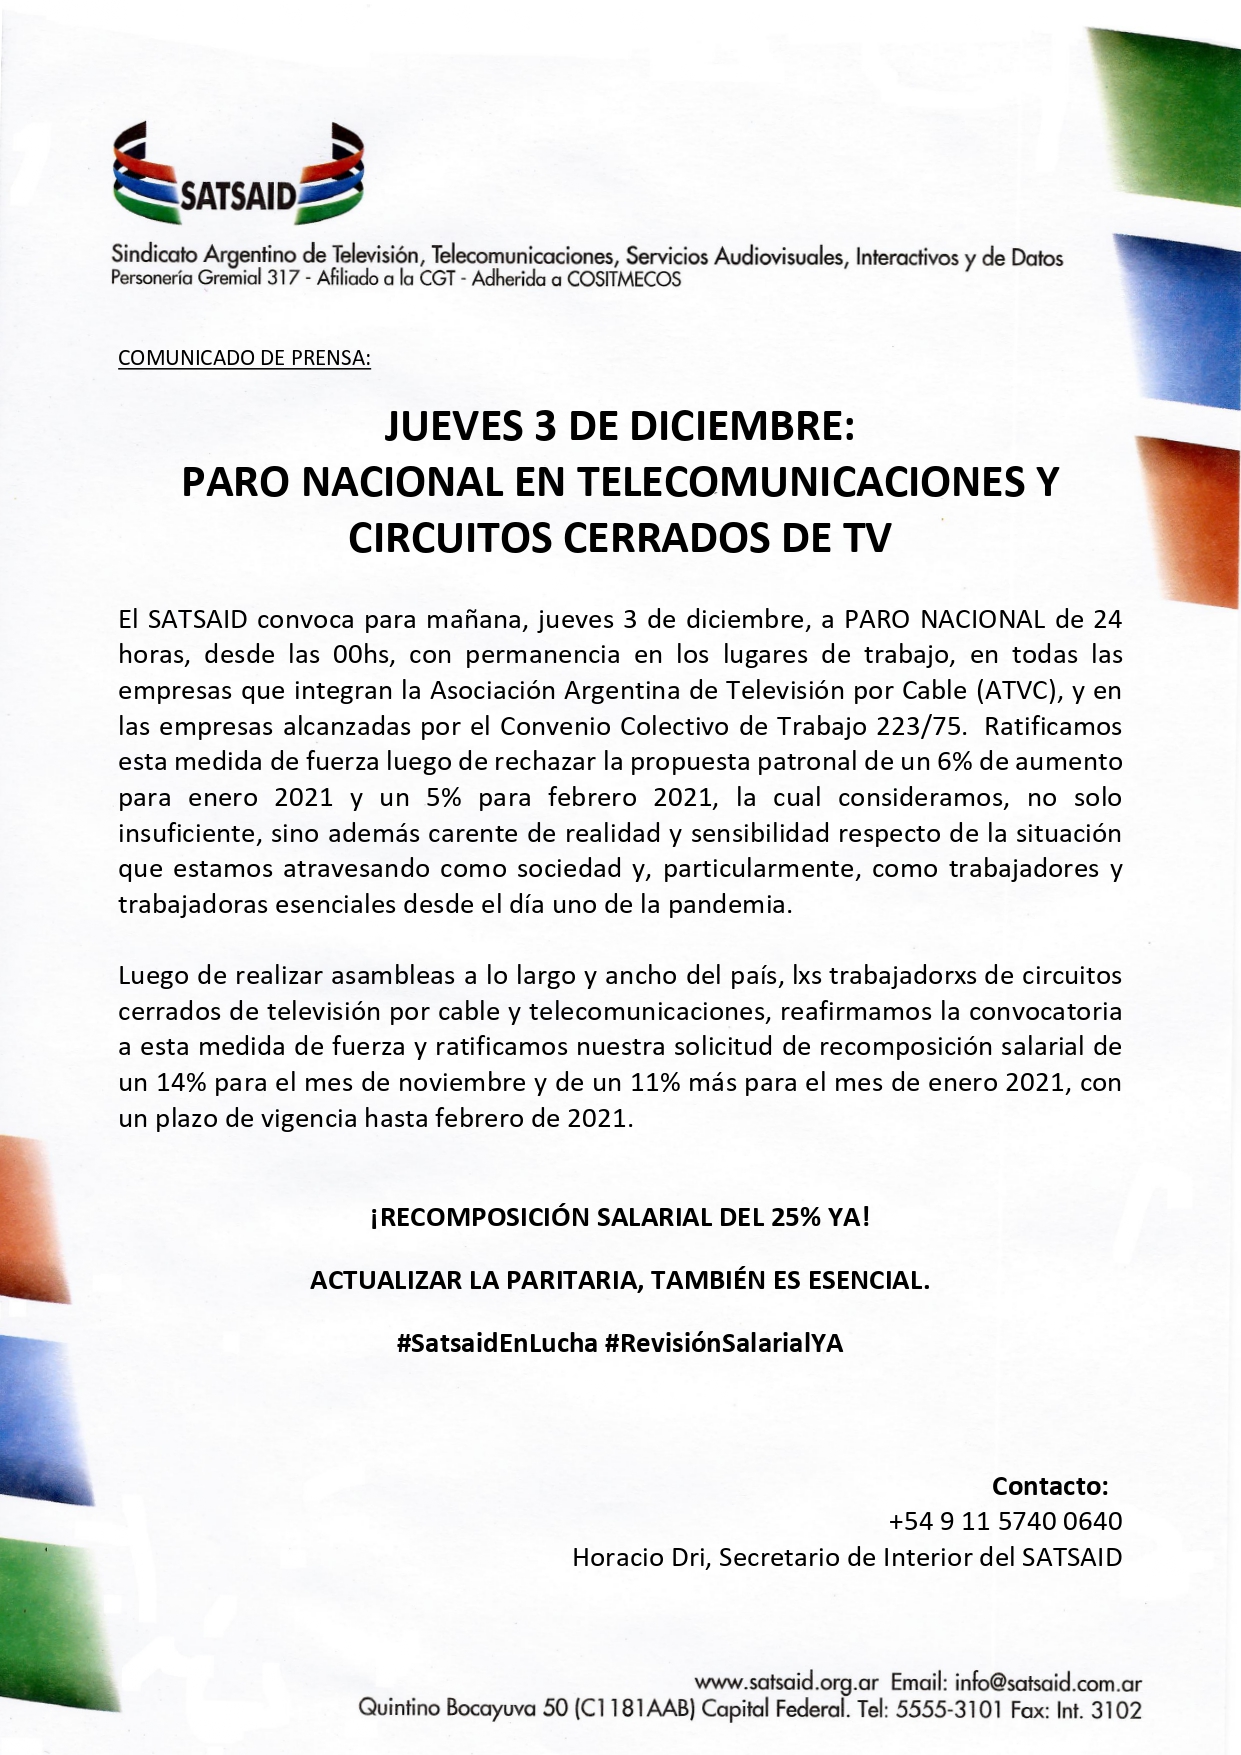 COMUNICADO DE PRENSA: JUEVES 3 DE DICIEMBRE: PARO NACIONAL EN TELECOMUNICACIONES – CIRCUITOS CERRADOS DE TV